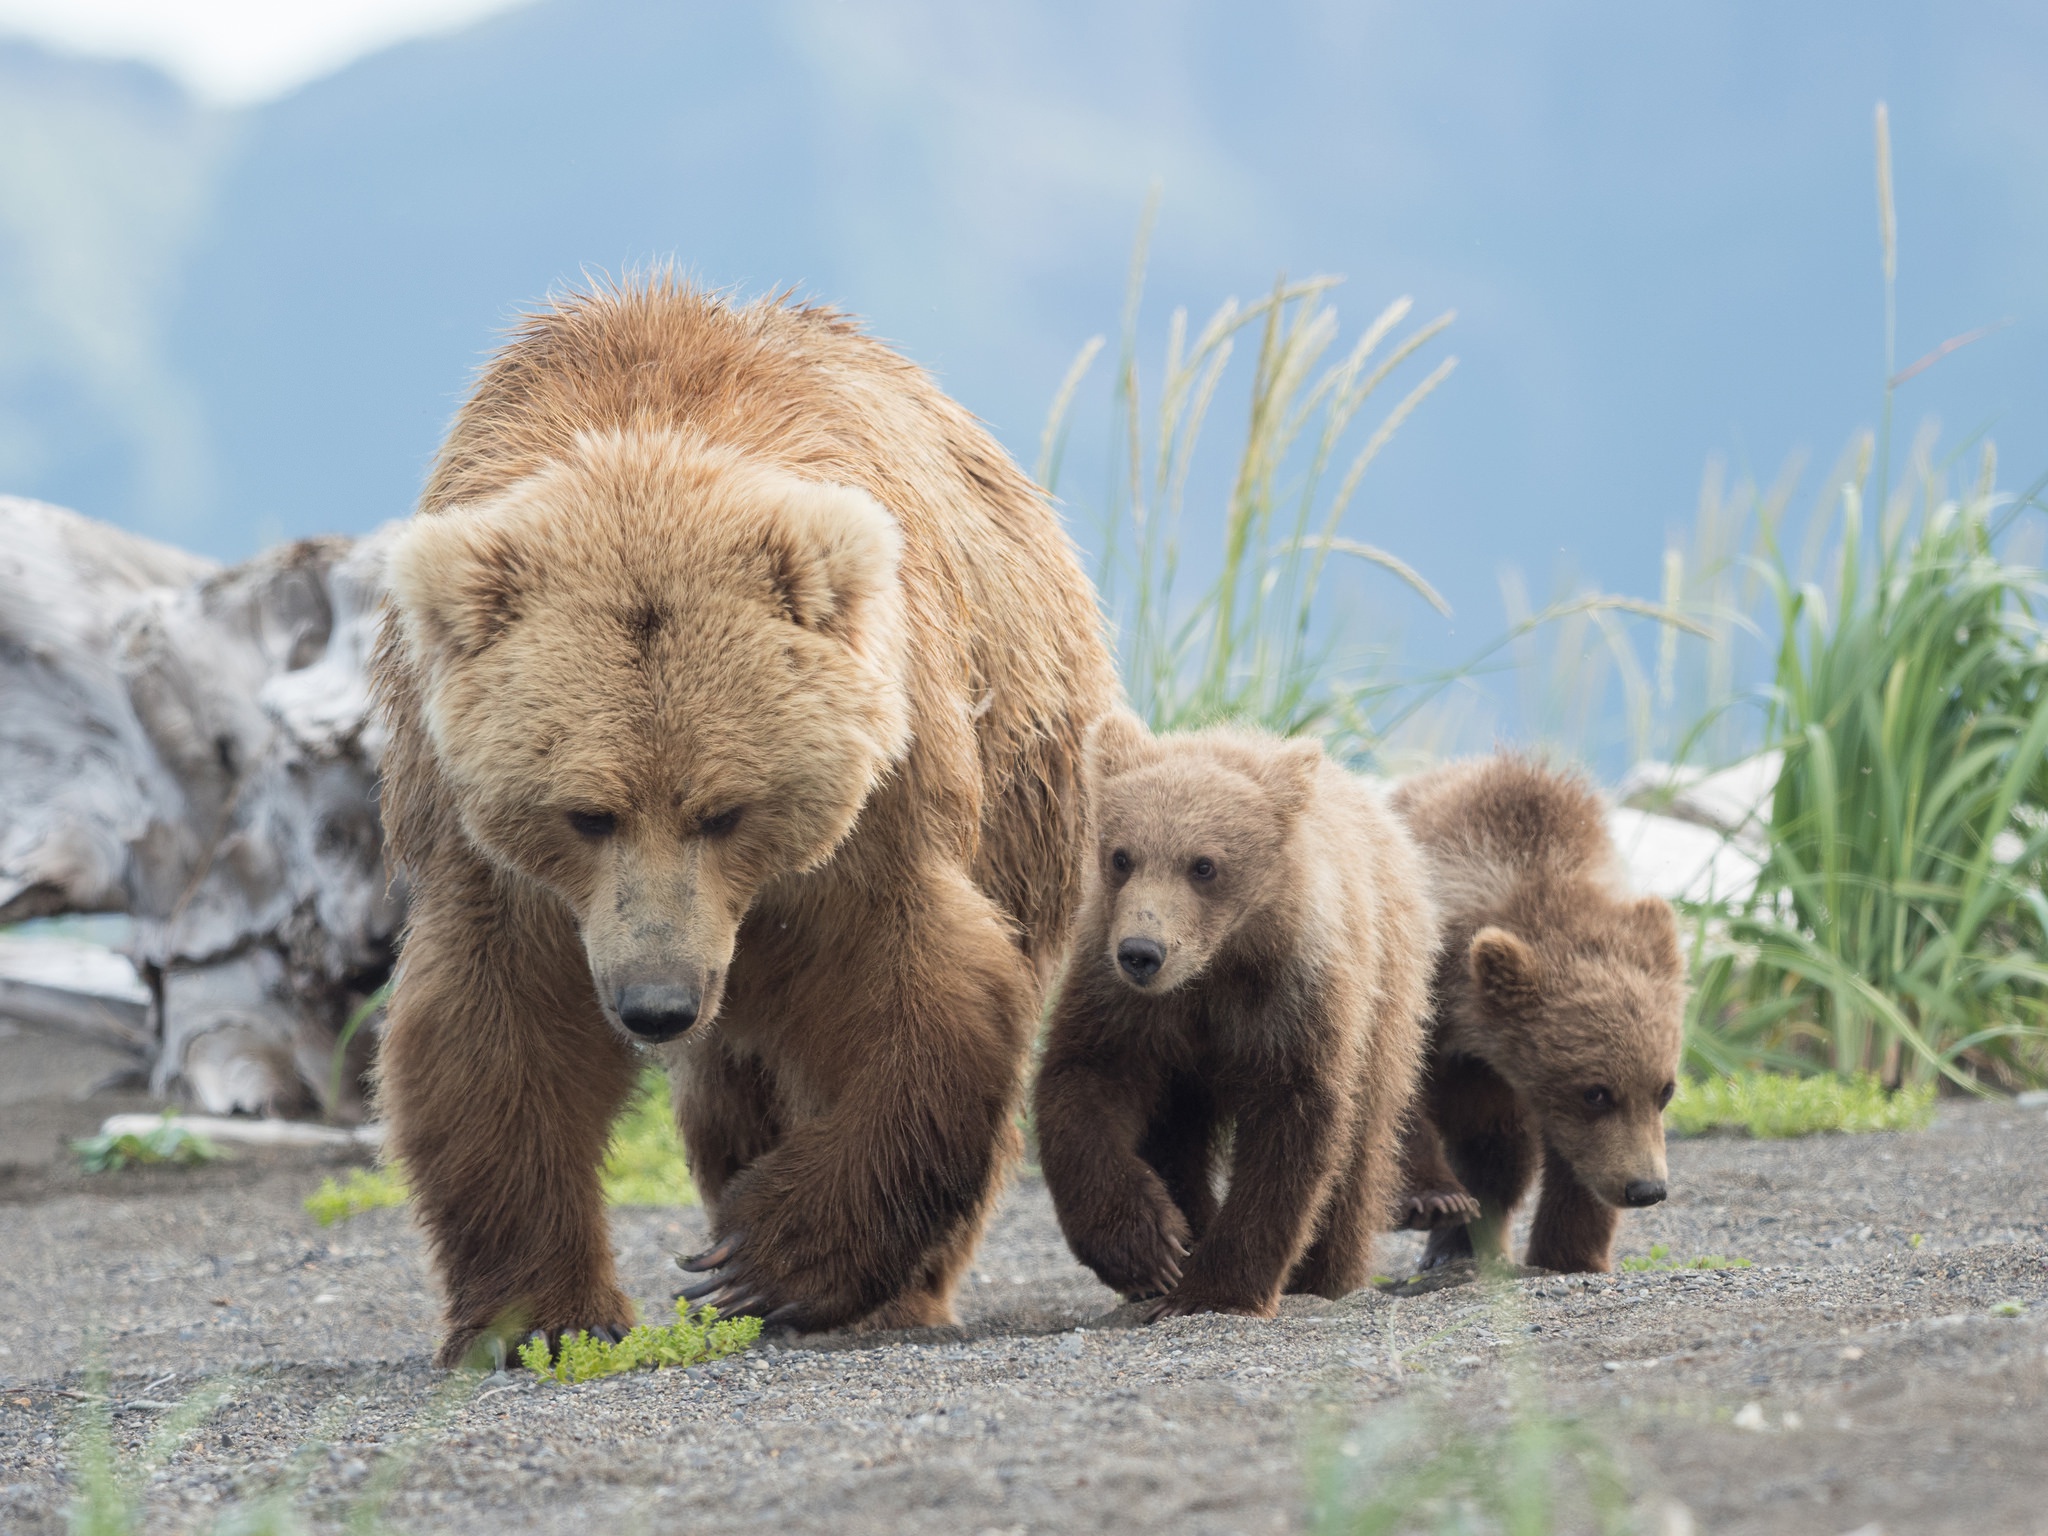 Mama bear and two bear cubs